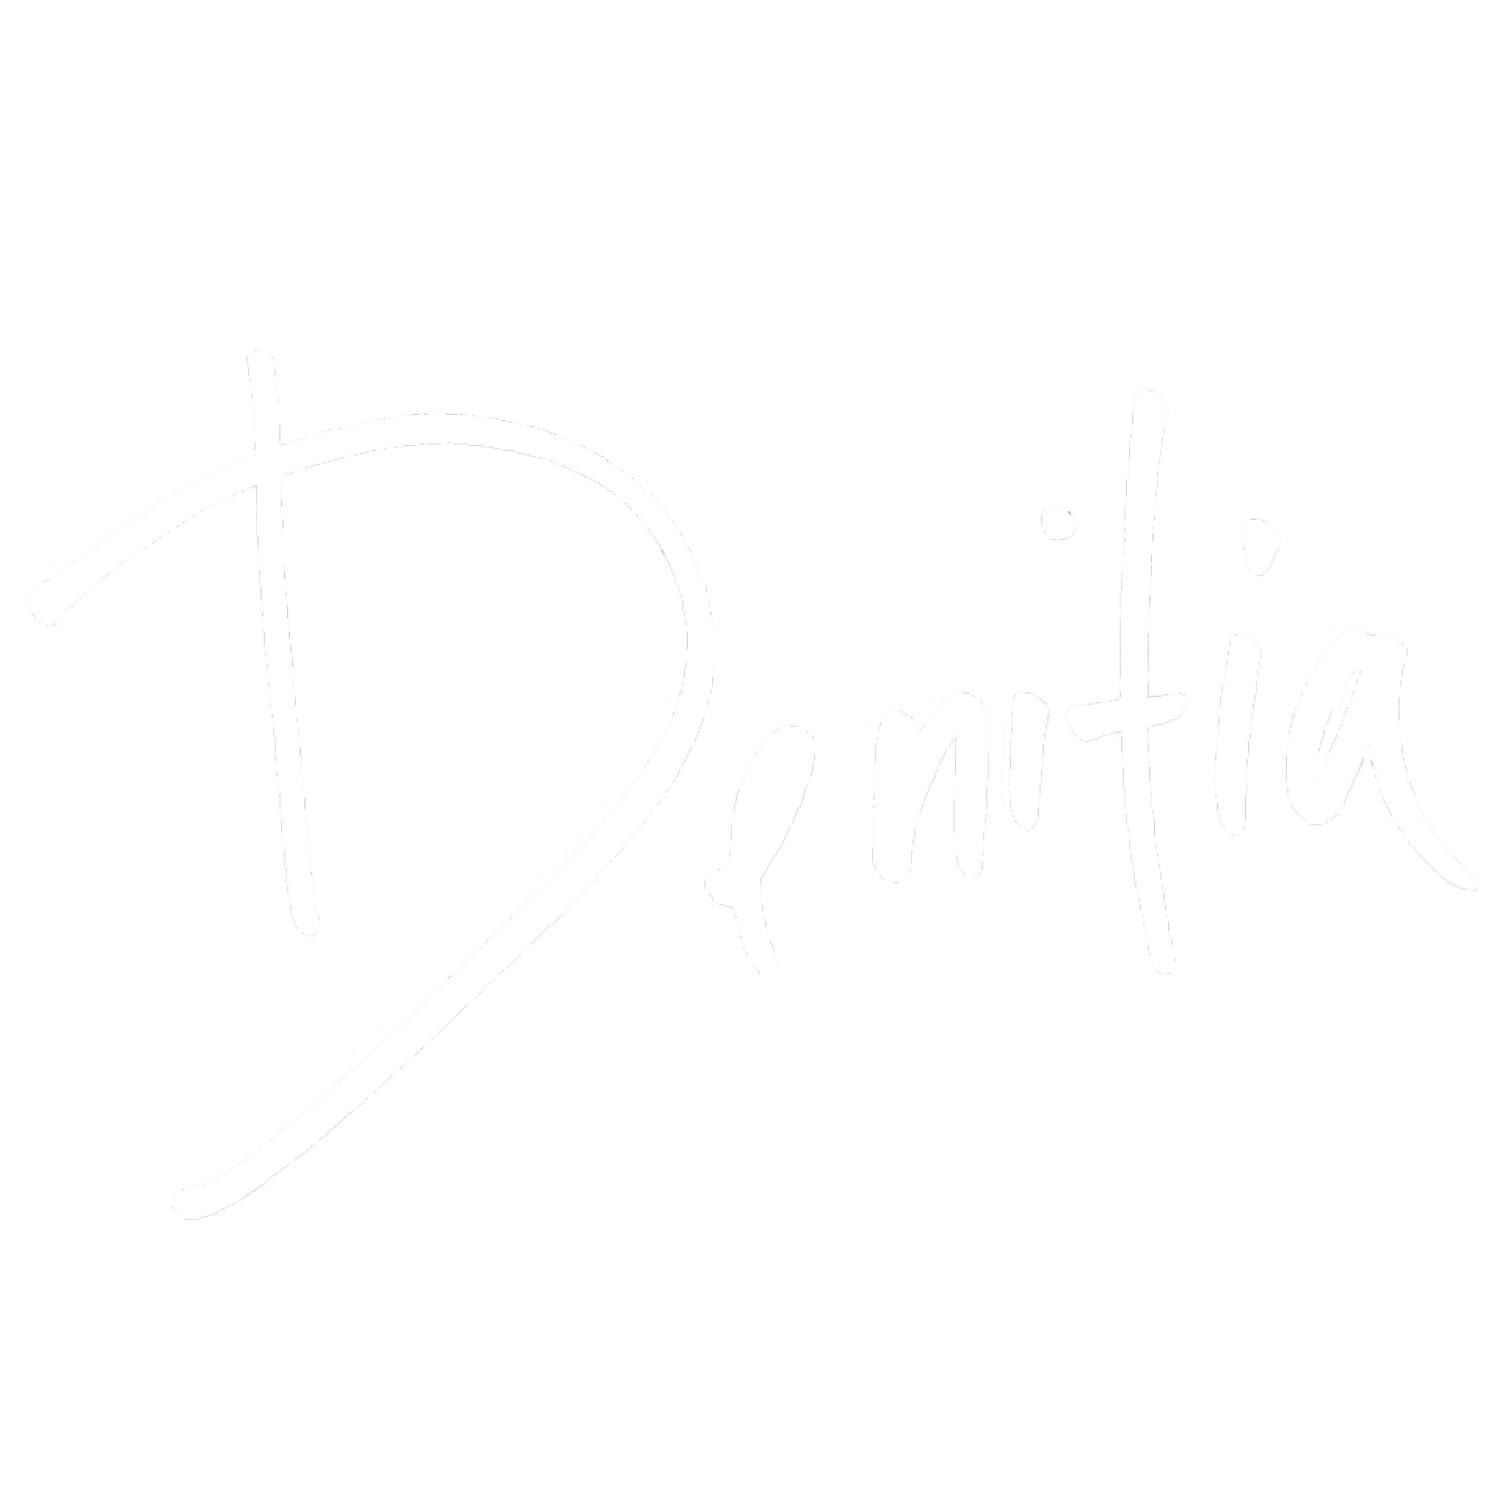 Denitia